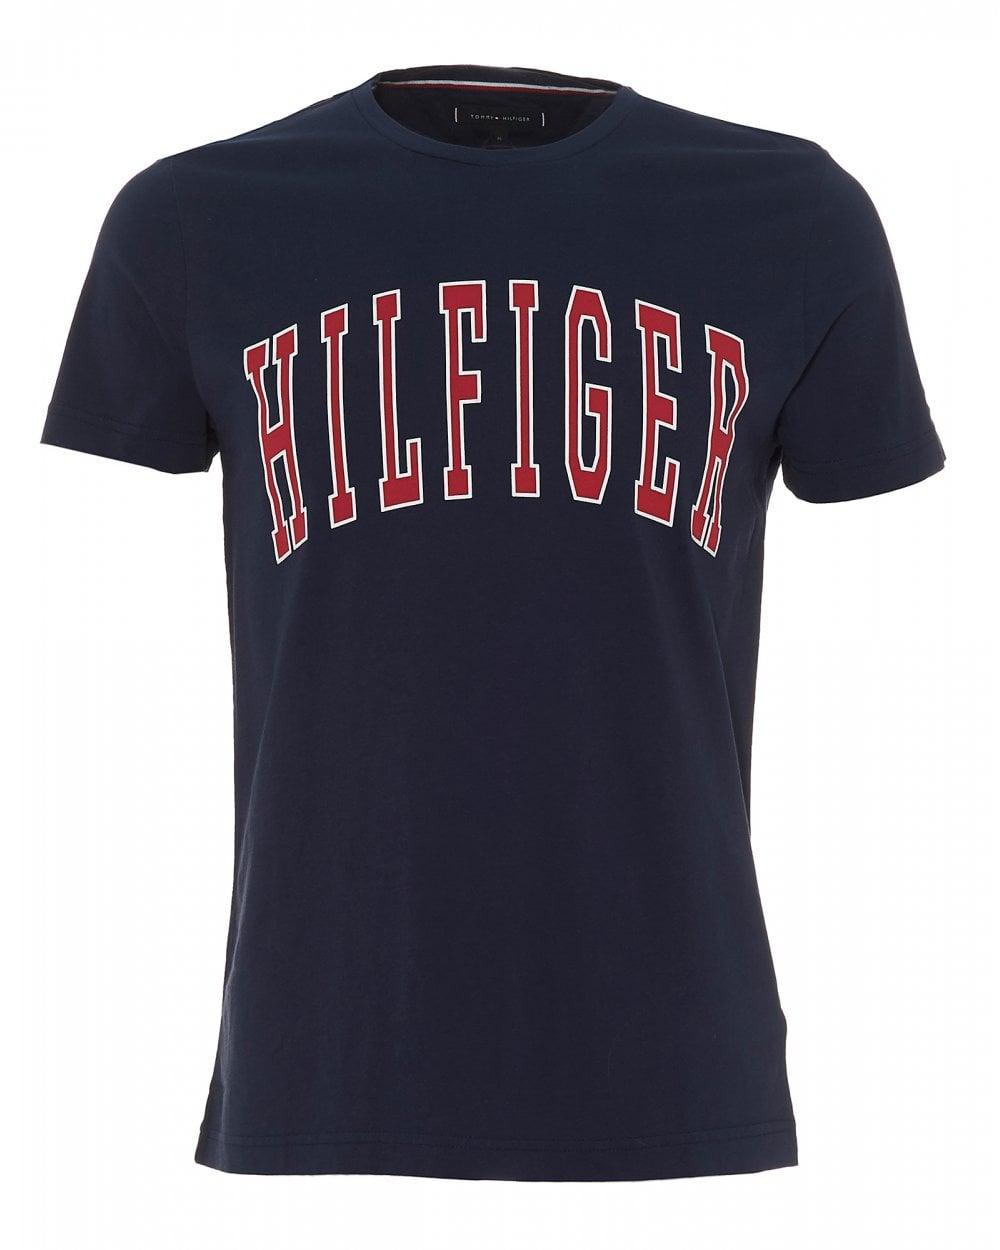 Tommy Hilfiger Black Logo - Tommy Hilfiger Mens Retro College Logo T-Shirt, Black Iris Tee